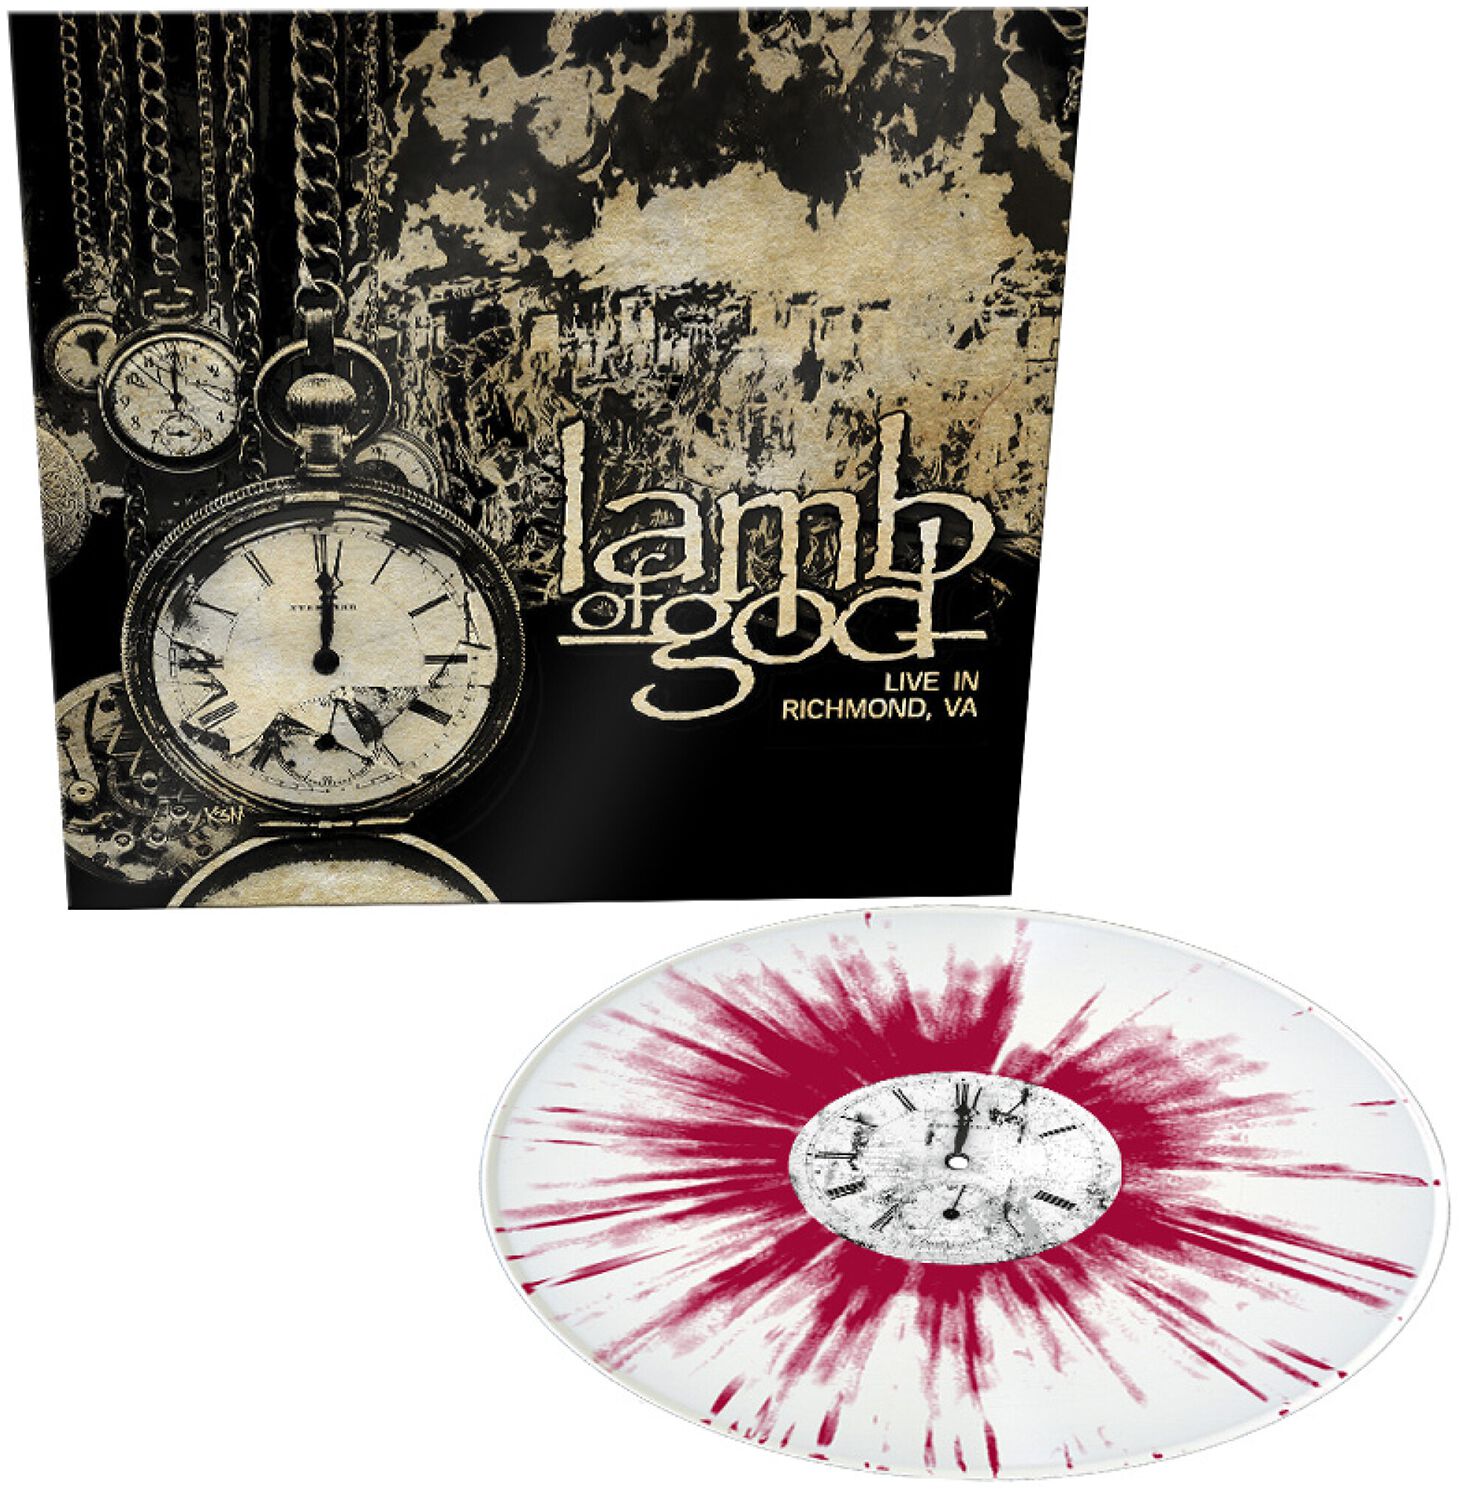 Lamb Of God Lamb of god - Live in Richmond, VA LP splattered